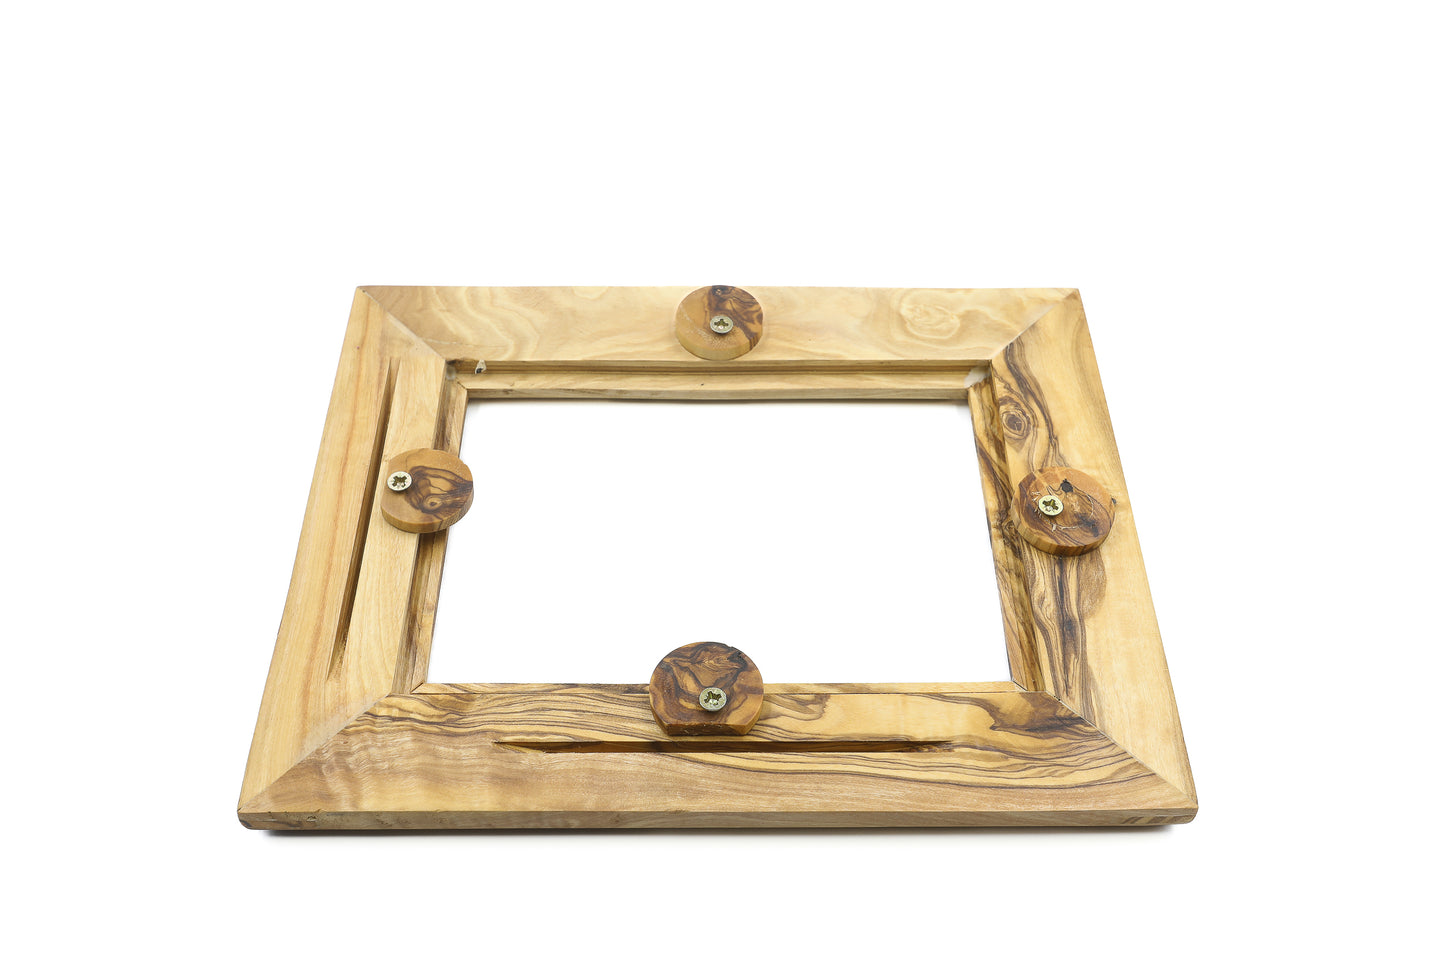 Unique vintage olive wood frame for your special moments